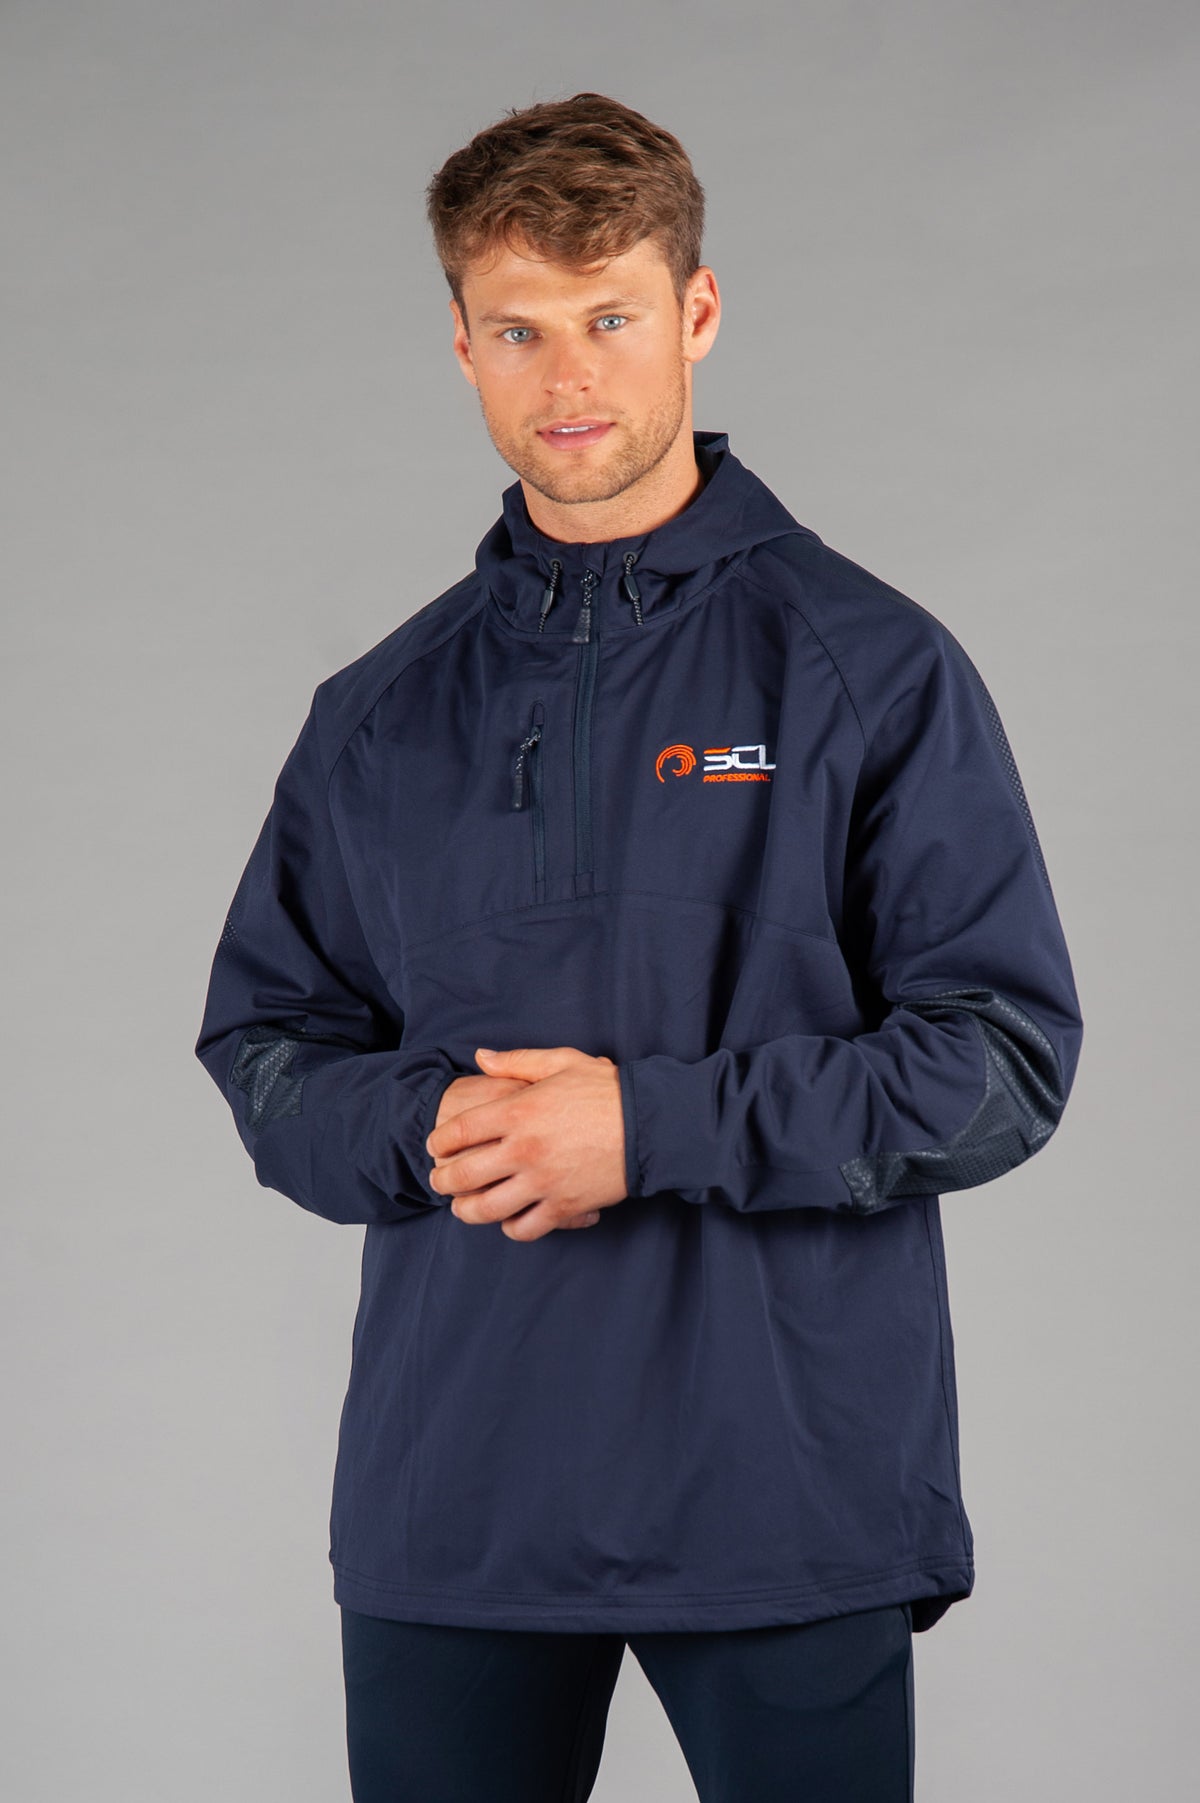 SCL Professional Rain Jacket